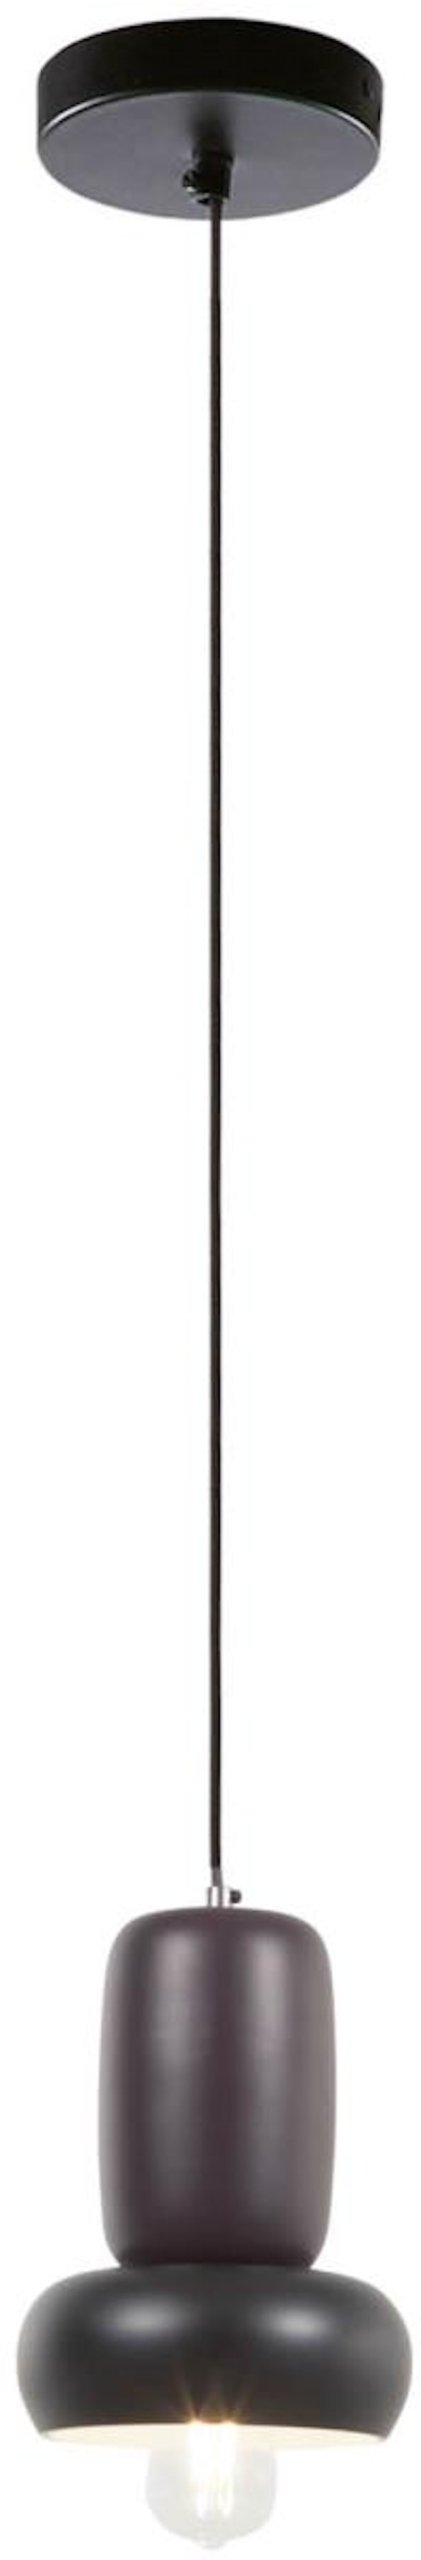 Cathaysa, Pendel lampe, Metal by LaForma (H: 28 cm. x B: 19 cm. x L: 19 cm., Rød/sort)